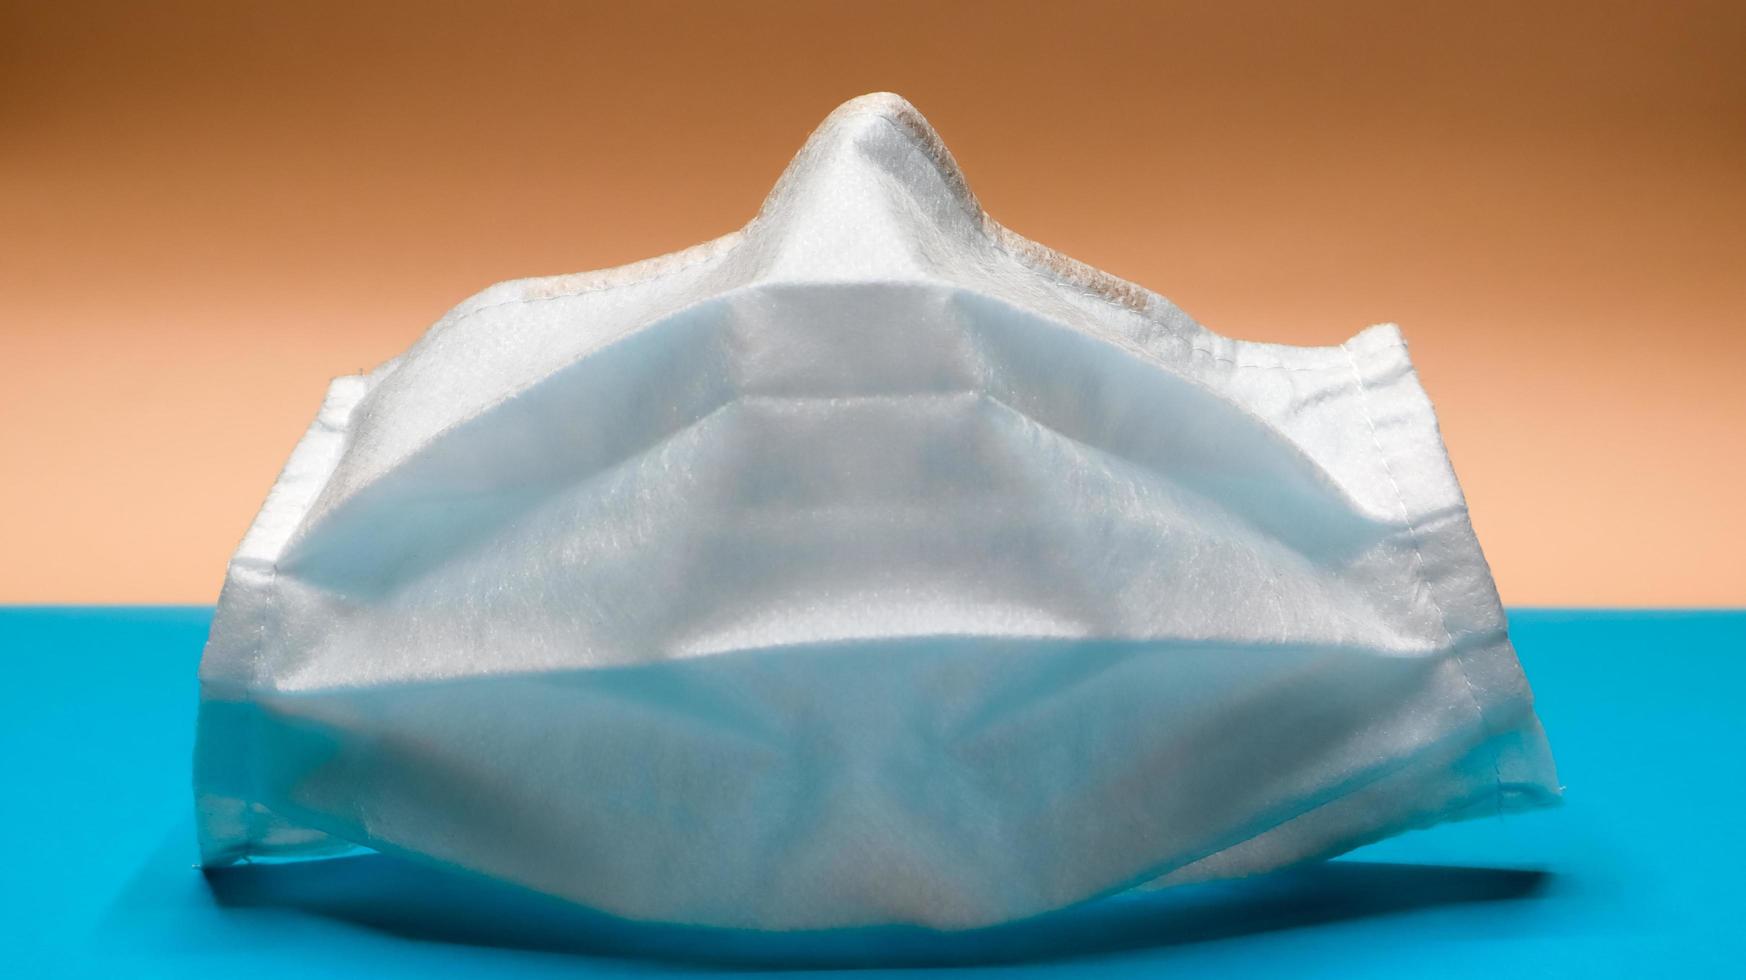 uma máscara facial cirúrgica descartável de 3 camadas com almofadas de borracha para cobrir a boca e o nariz. o conceito de proteção contra bactérias, saúde e medicamentos. covid19. vírus perigoso foto